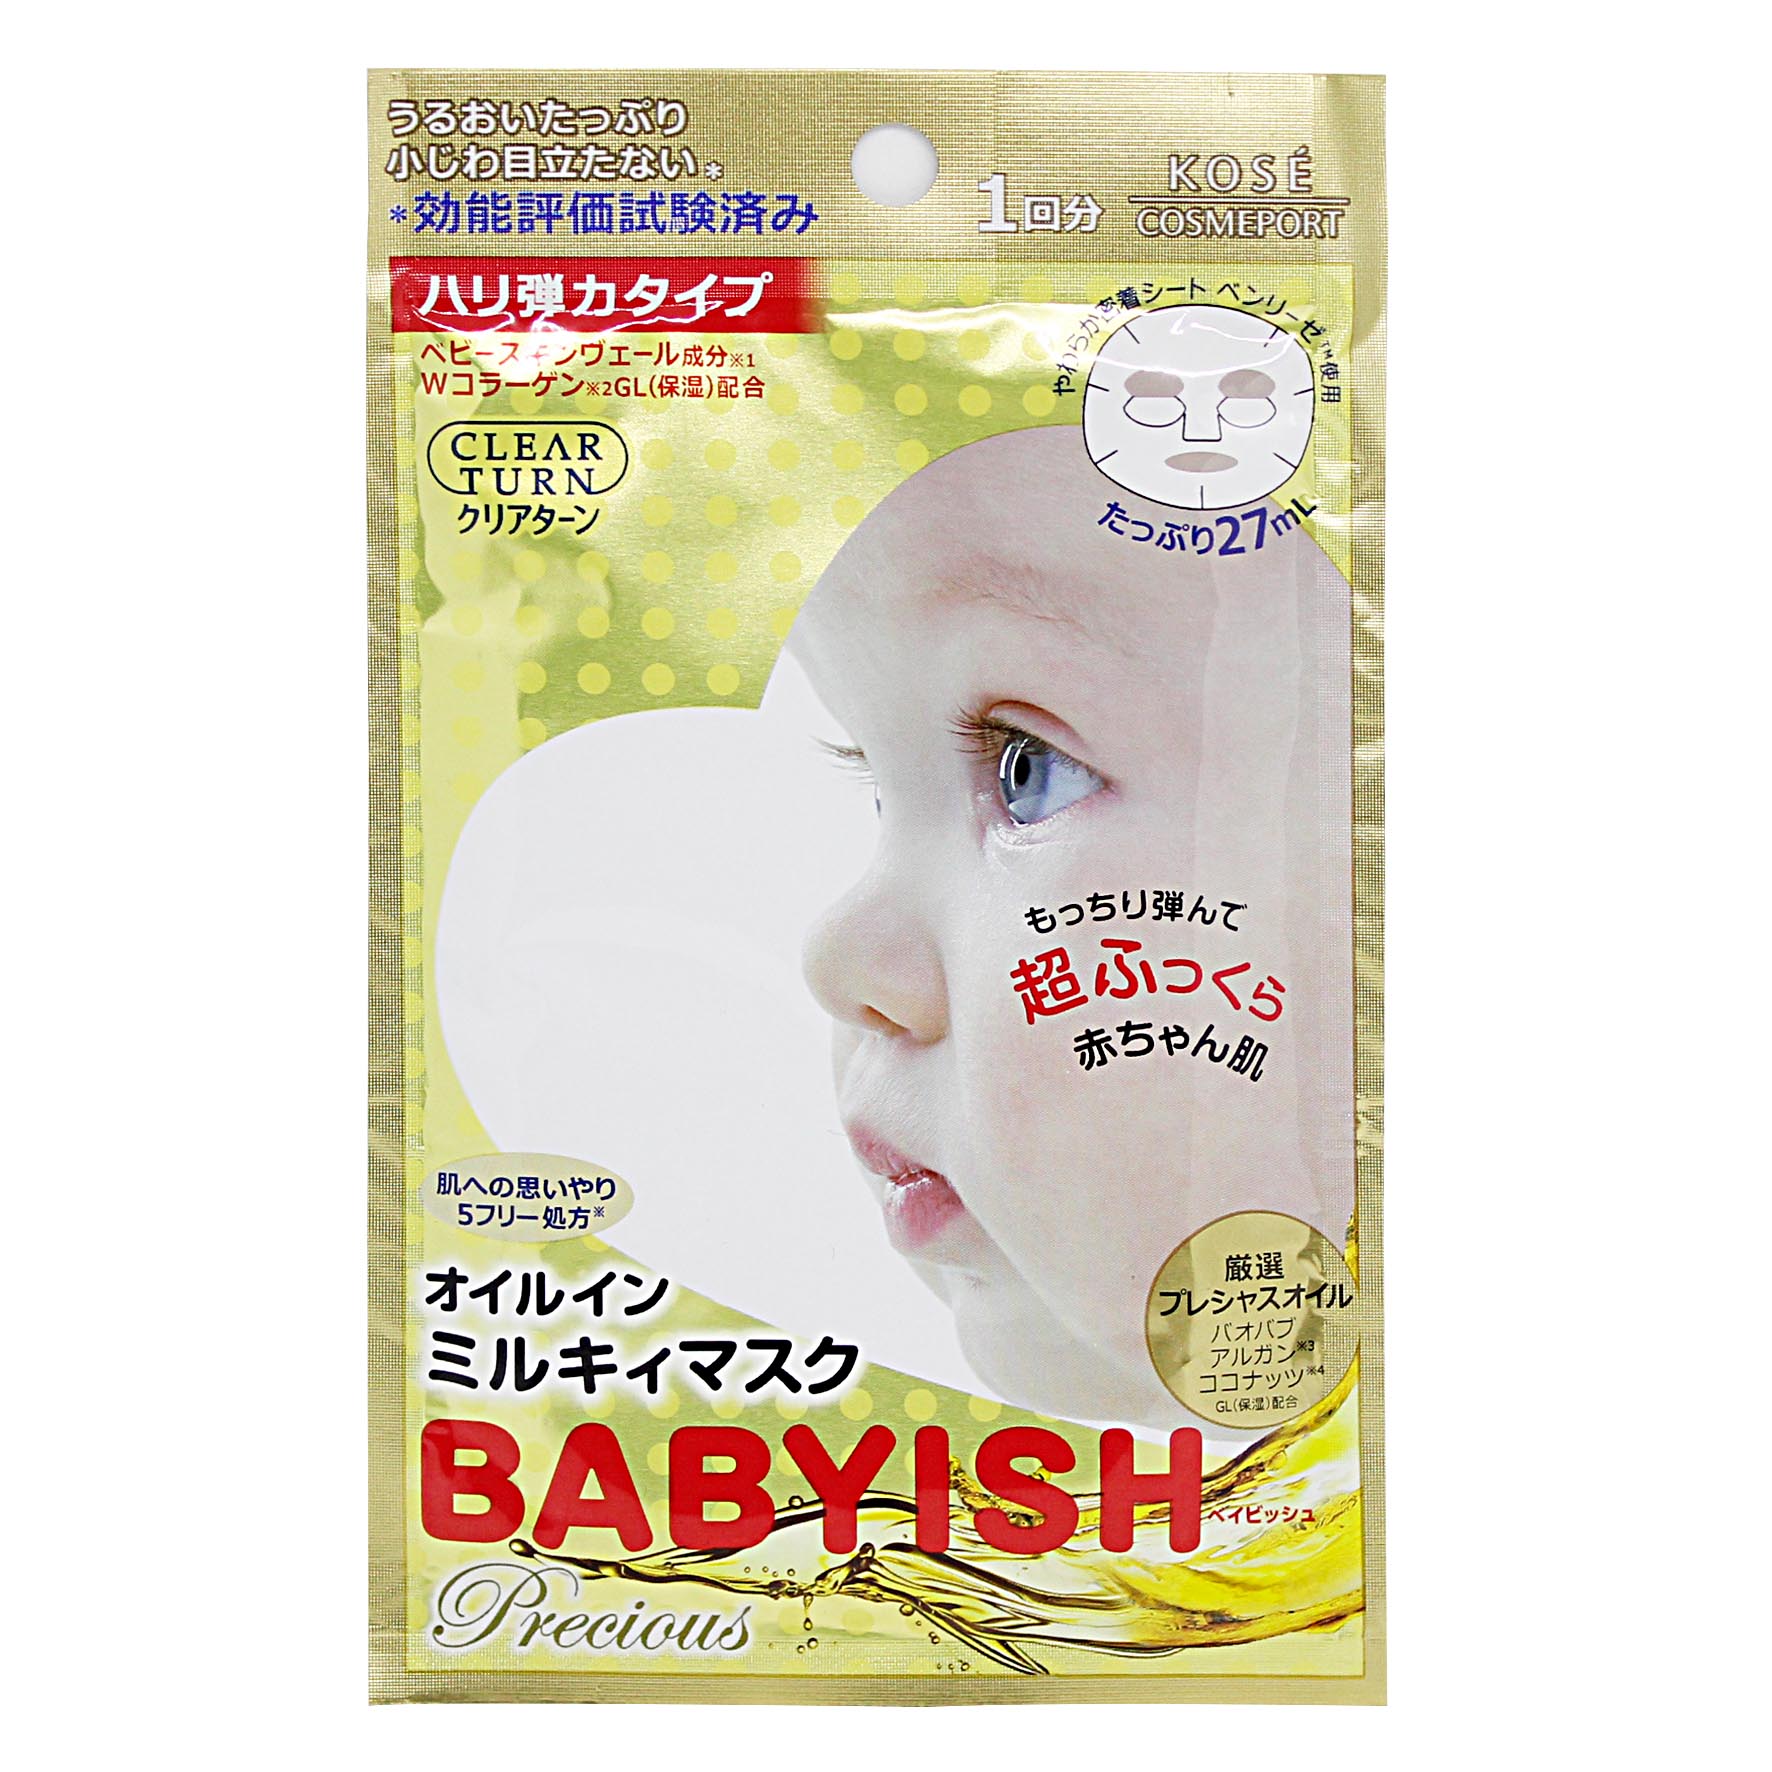 kose-clear-turn-babyish-precious-mask-b-1-sheets-buy1-get1-96-1609227718.jpg